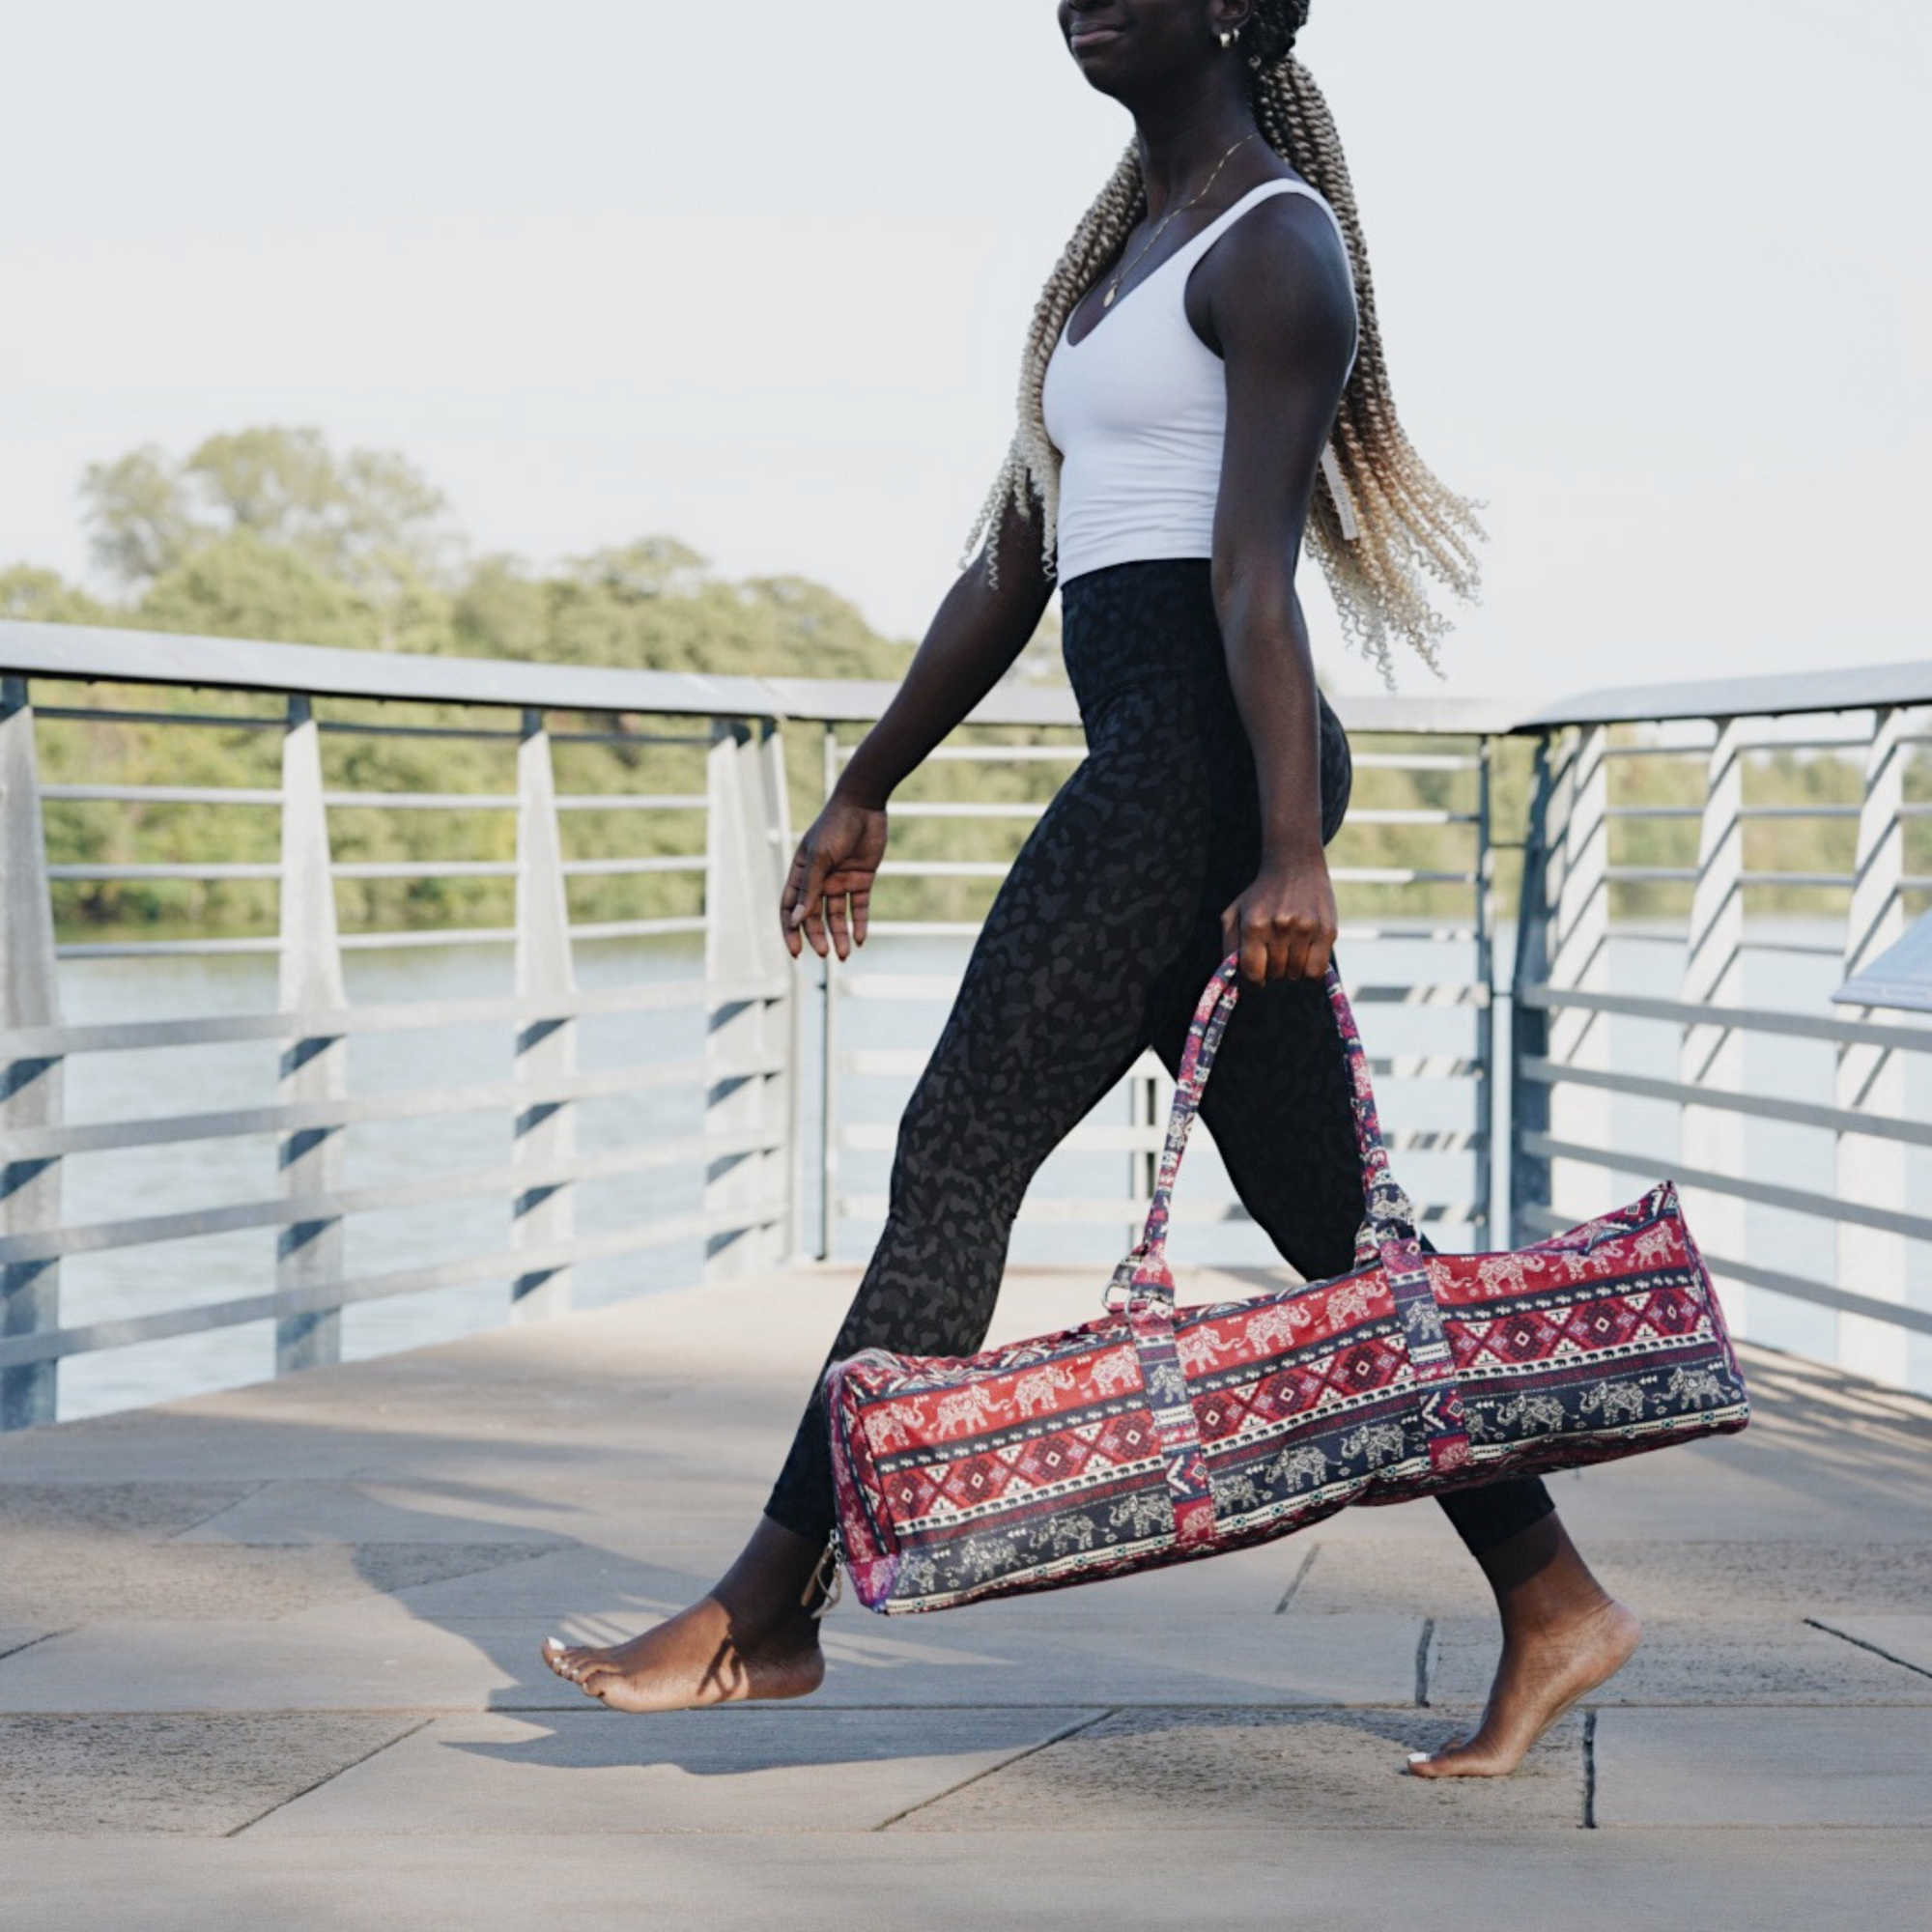 INOOMP Yoga Mat Bag Sports Duffle Bag Yoga Gym Bag Yoga Mat Straps